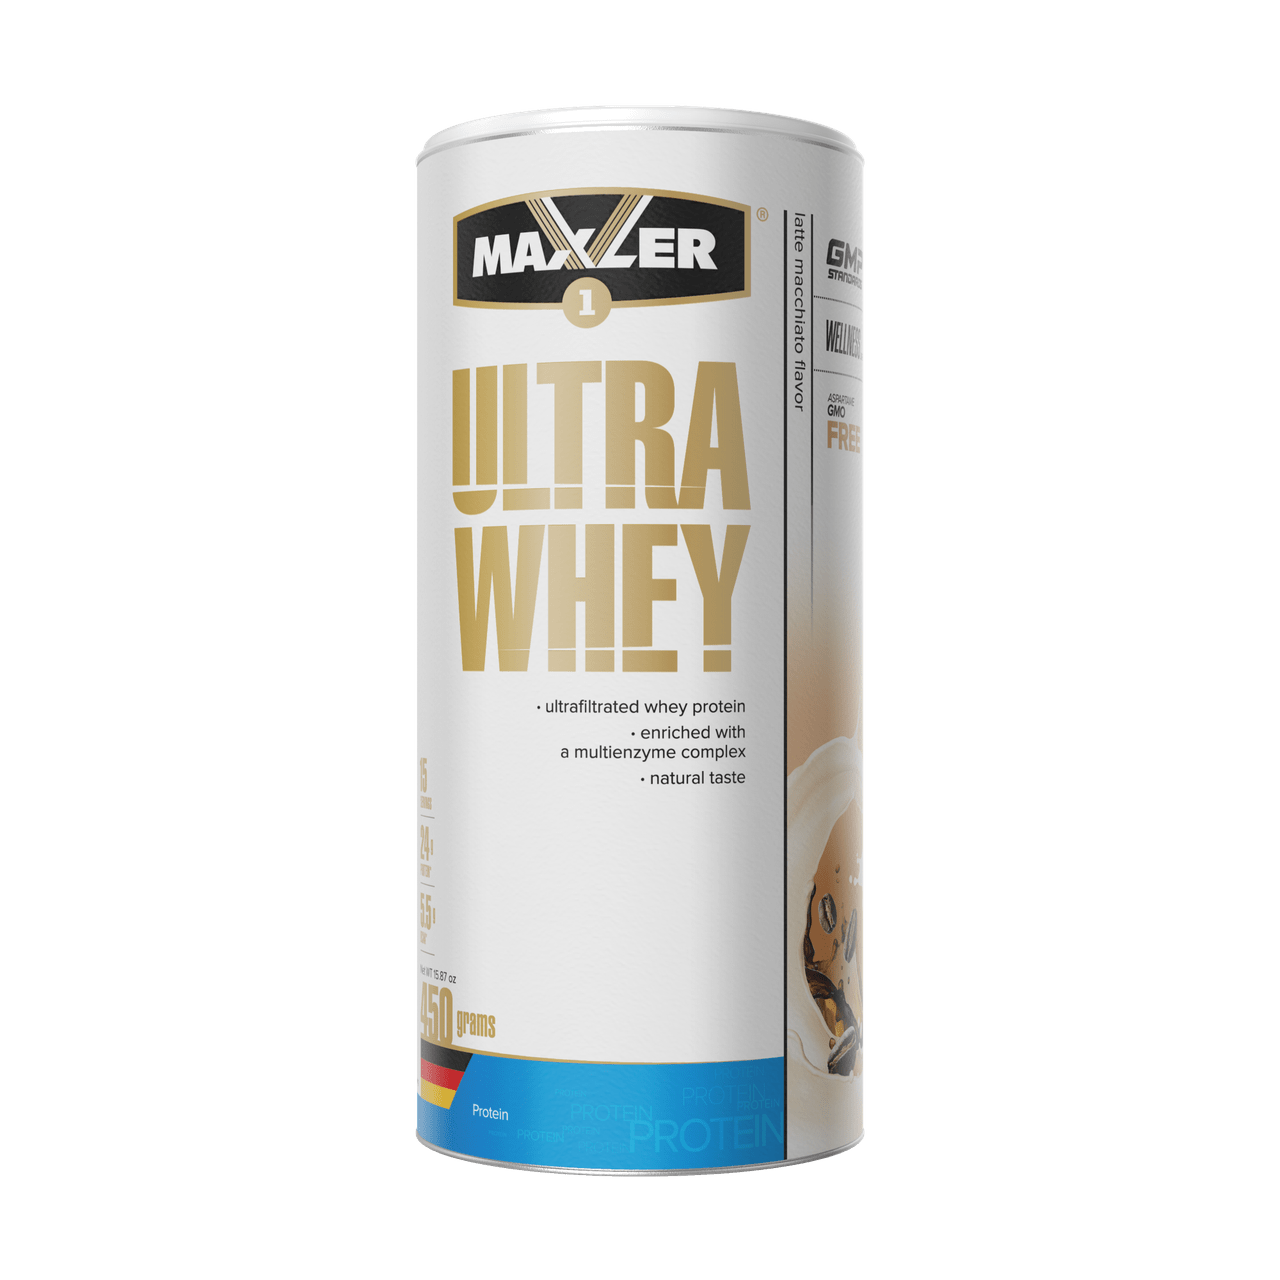 Комплексный протеин Maxler Ultra Whey (450 г) макслер ультра вей latte macchiato,  мл, Maxler. Комплексный протеин. 